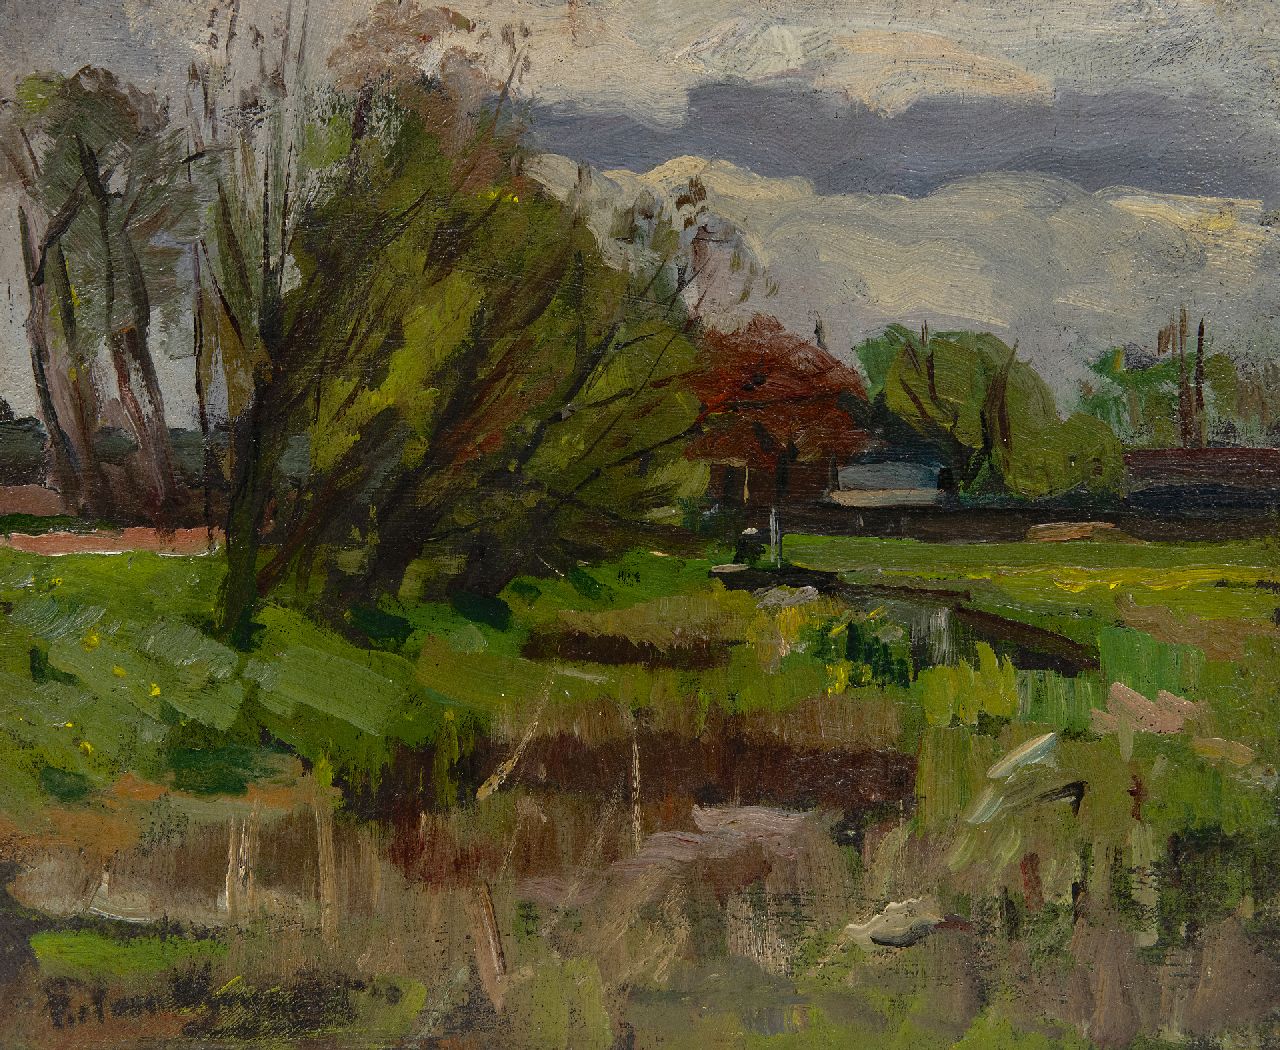 Wijngaerdt P.T. van | Petrus Theodorus 'Piet' van Wijngaerdt | Paintings offered for sale | Landscape near Amstelveen, oil on panel 30.2 x 36.0 cm, signed l.l. and dated '03